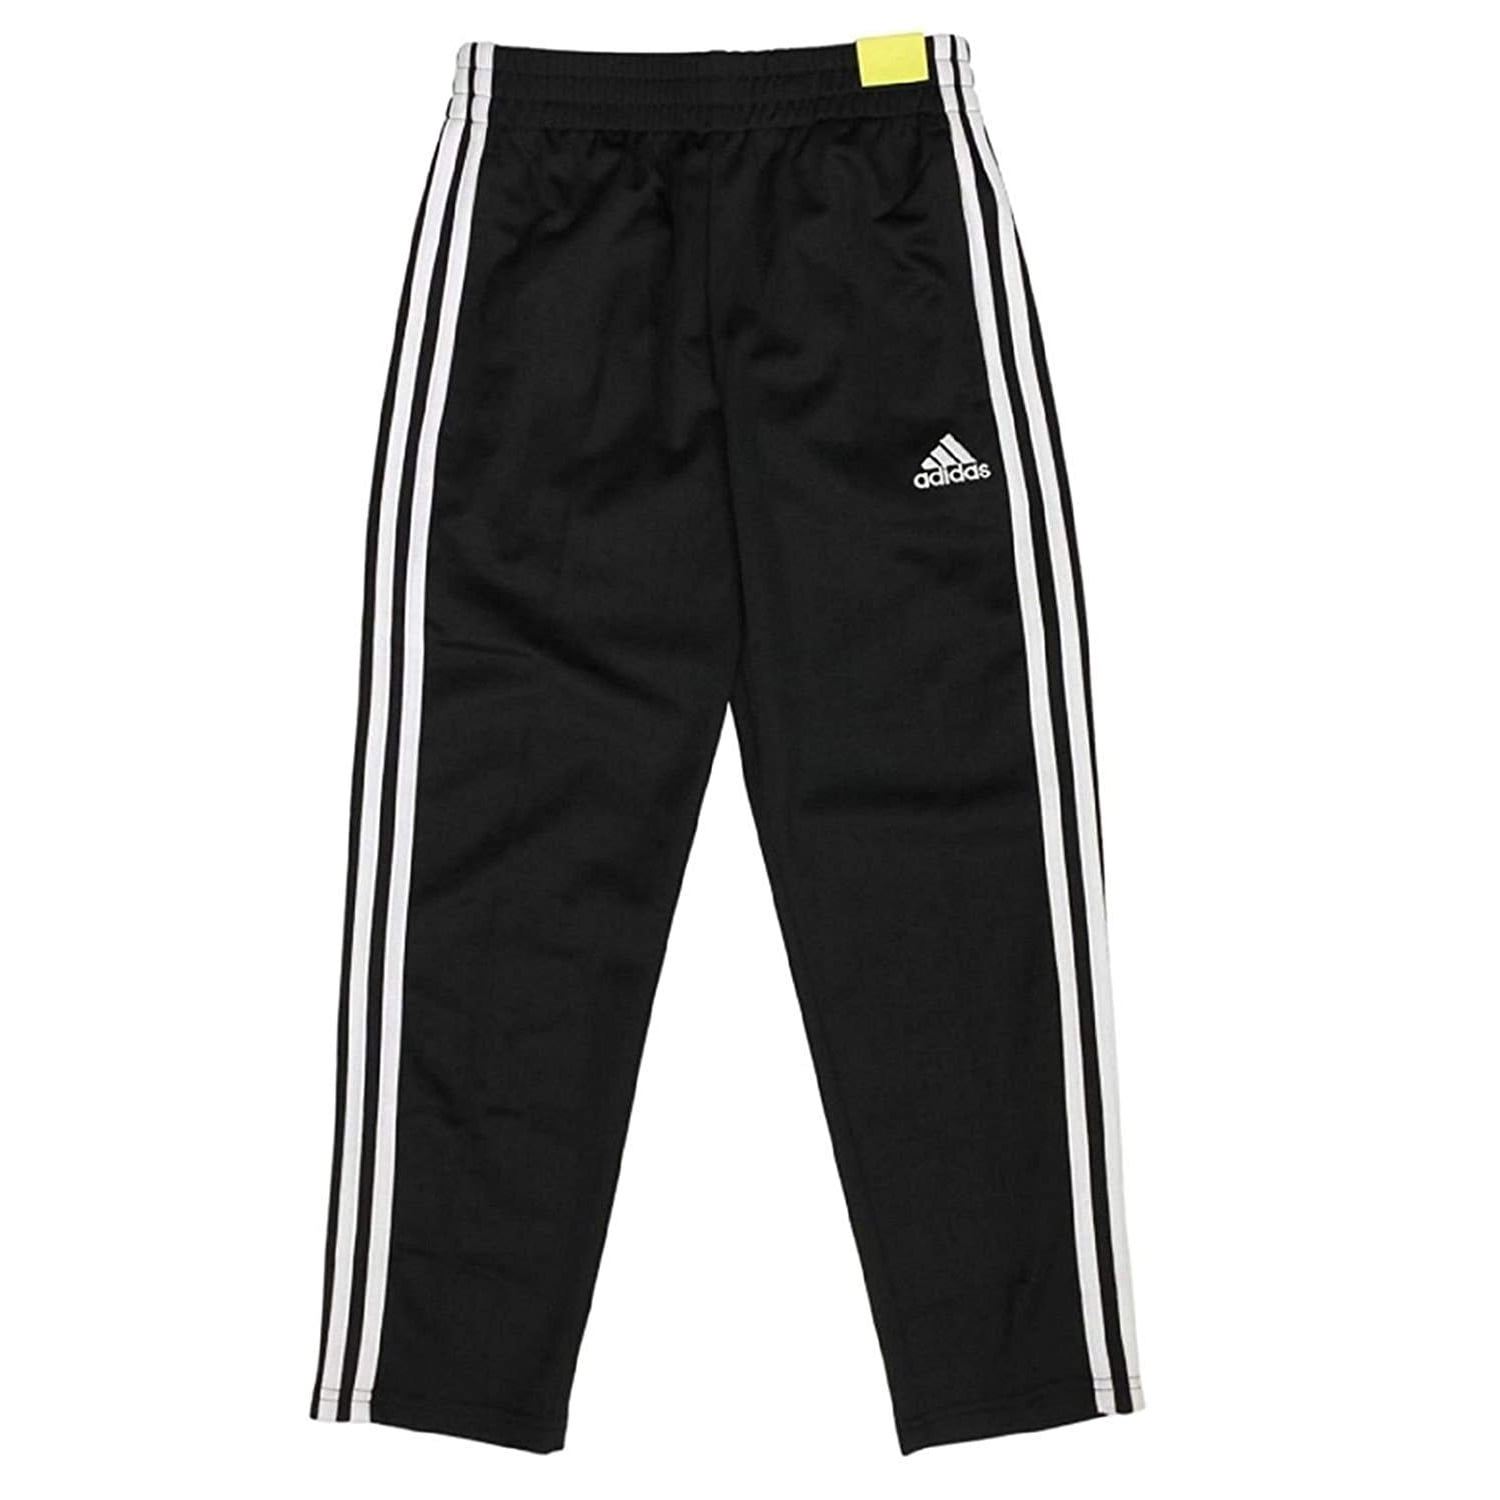 Adidas Boys 3 Stripe Performance Track Pants (Black, Small-8) - Walmart.com